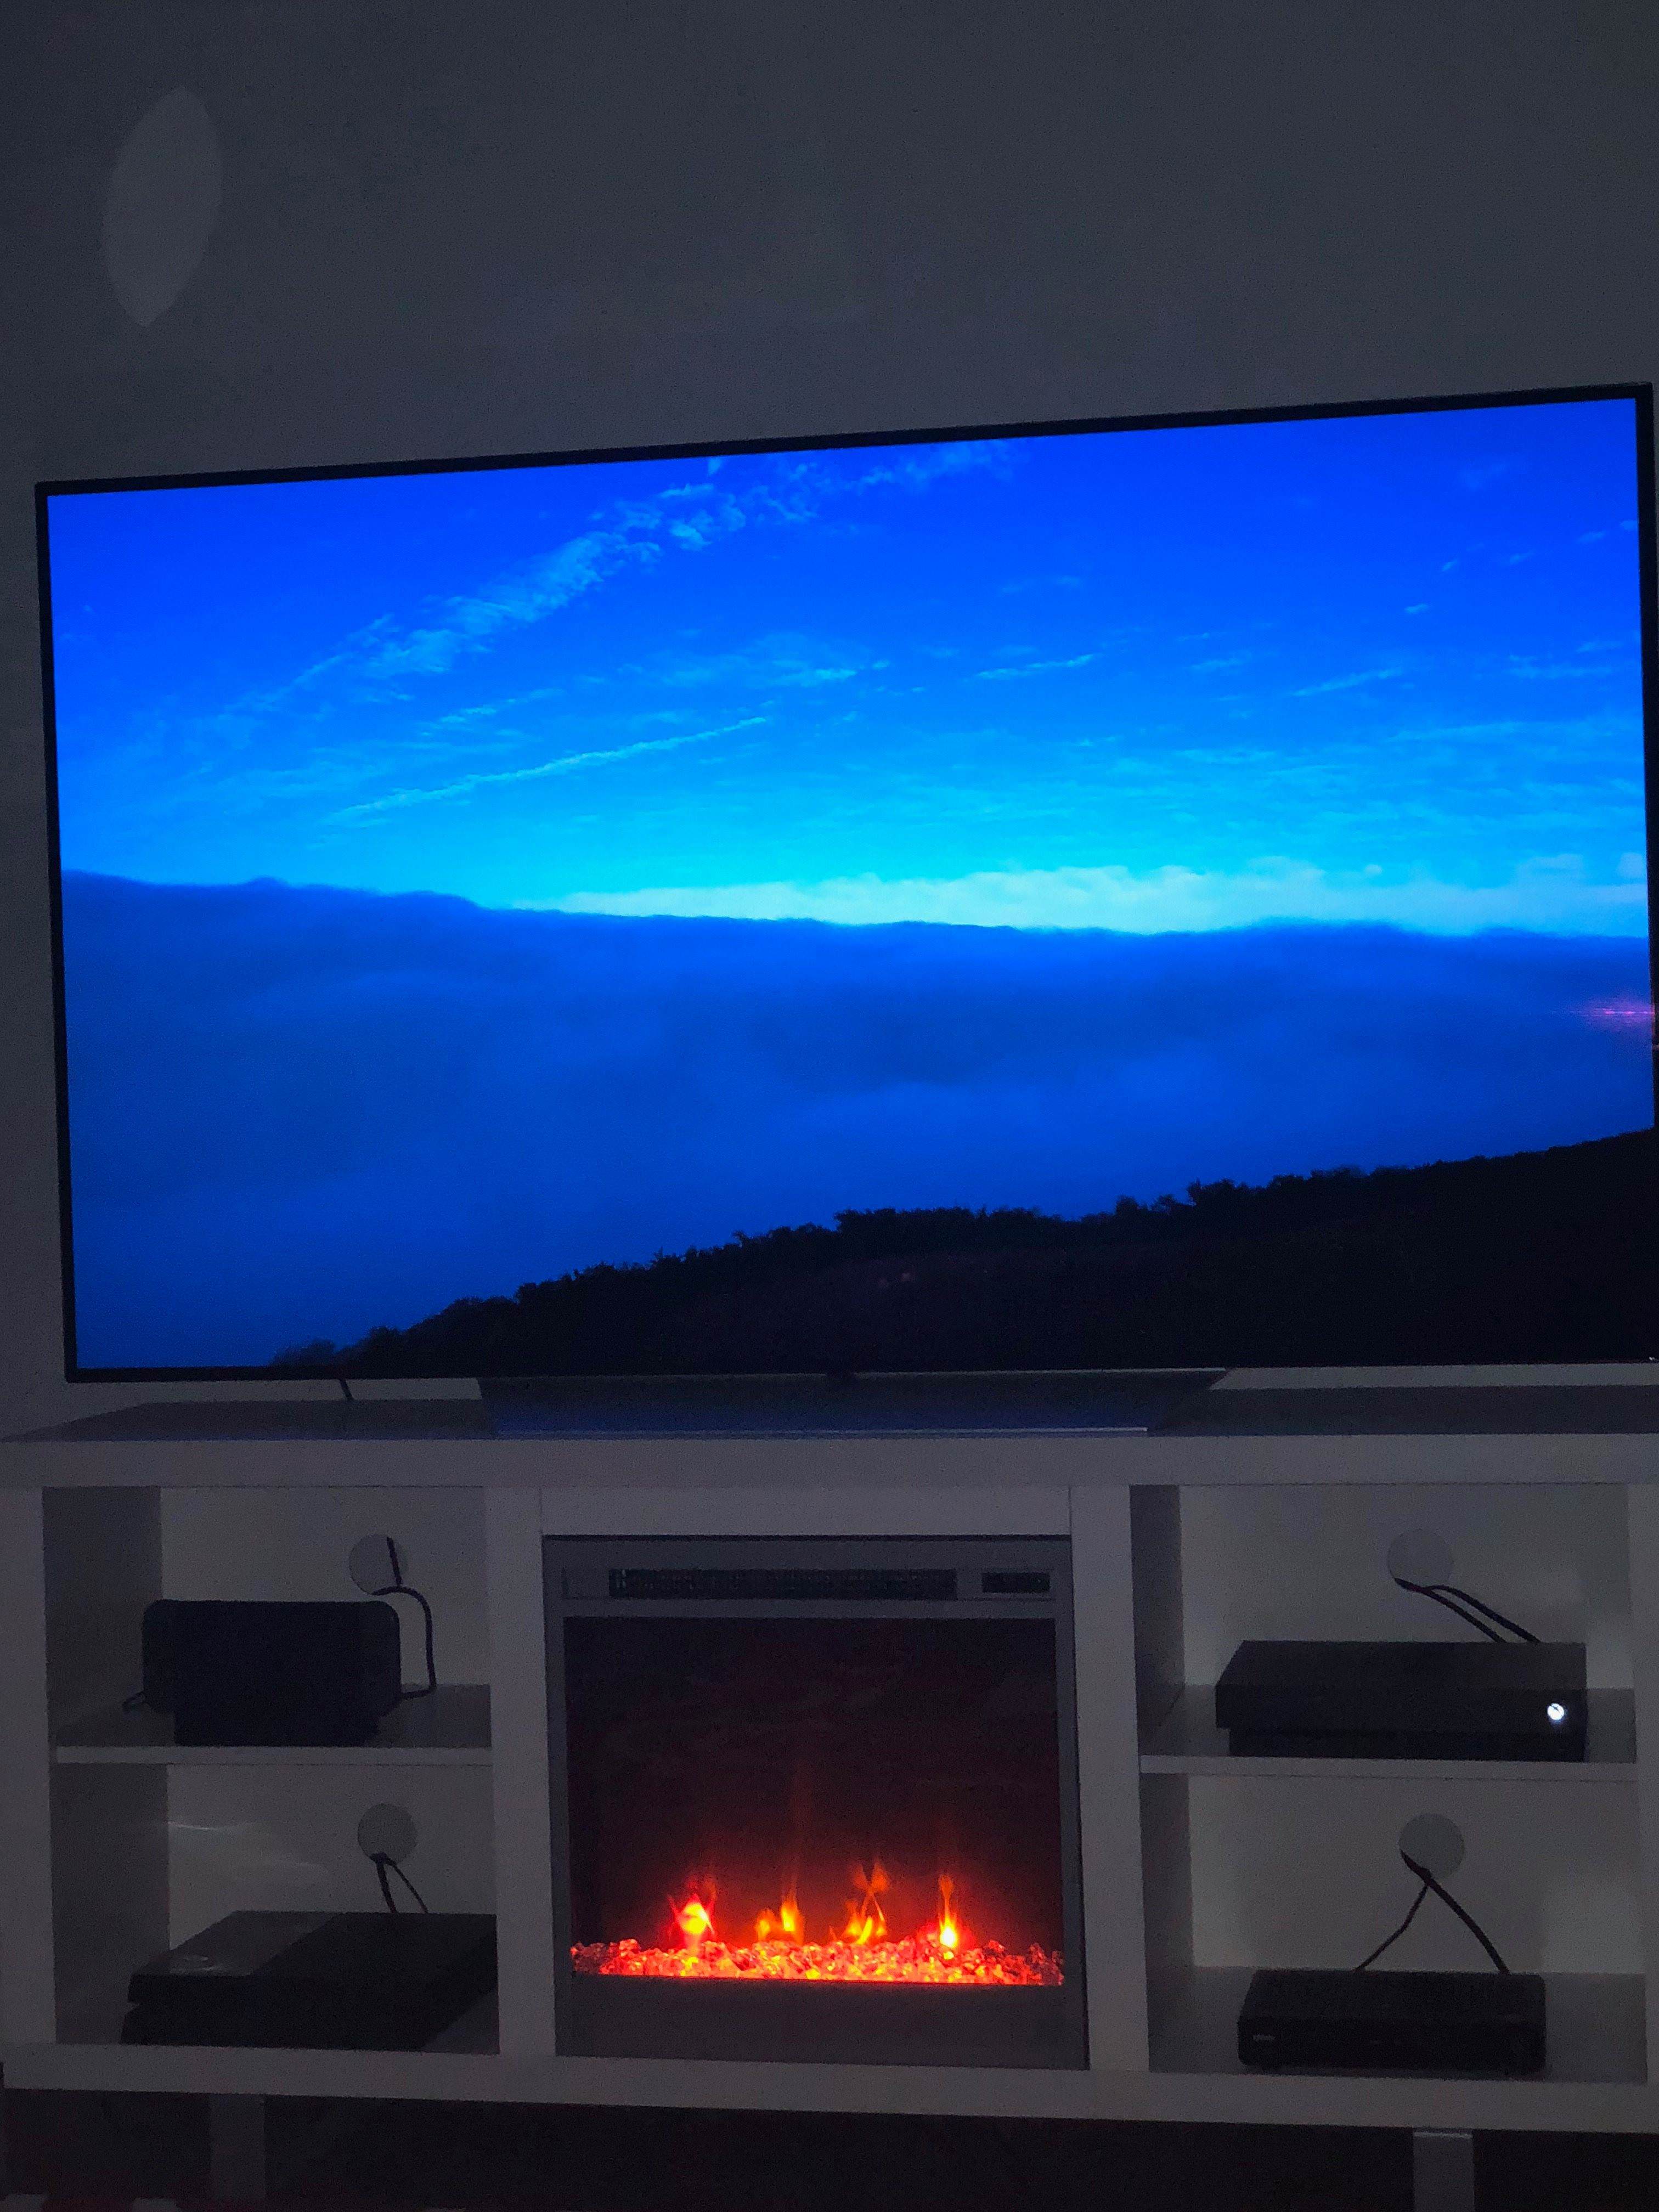 Fireplace with soundbar Elegant Post Your Gaming Setup 2018 Edition